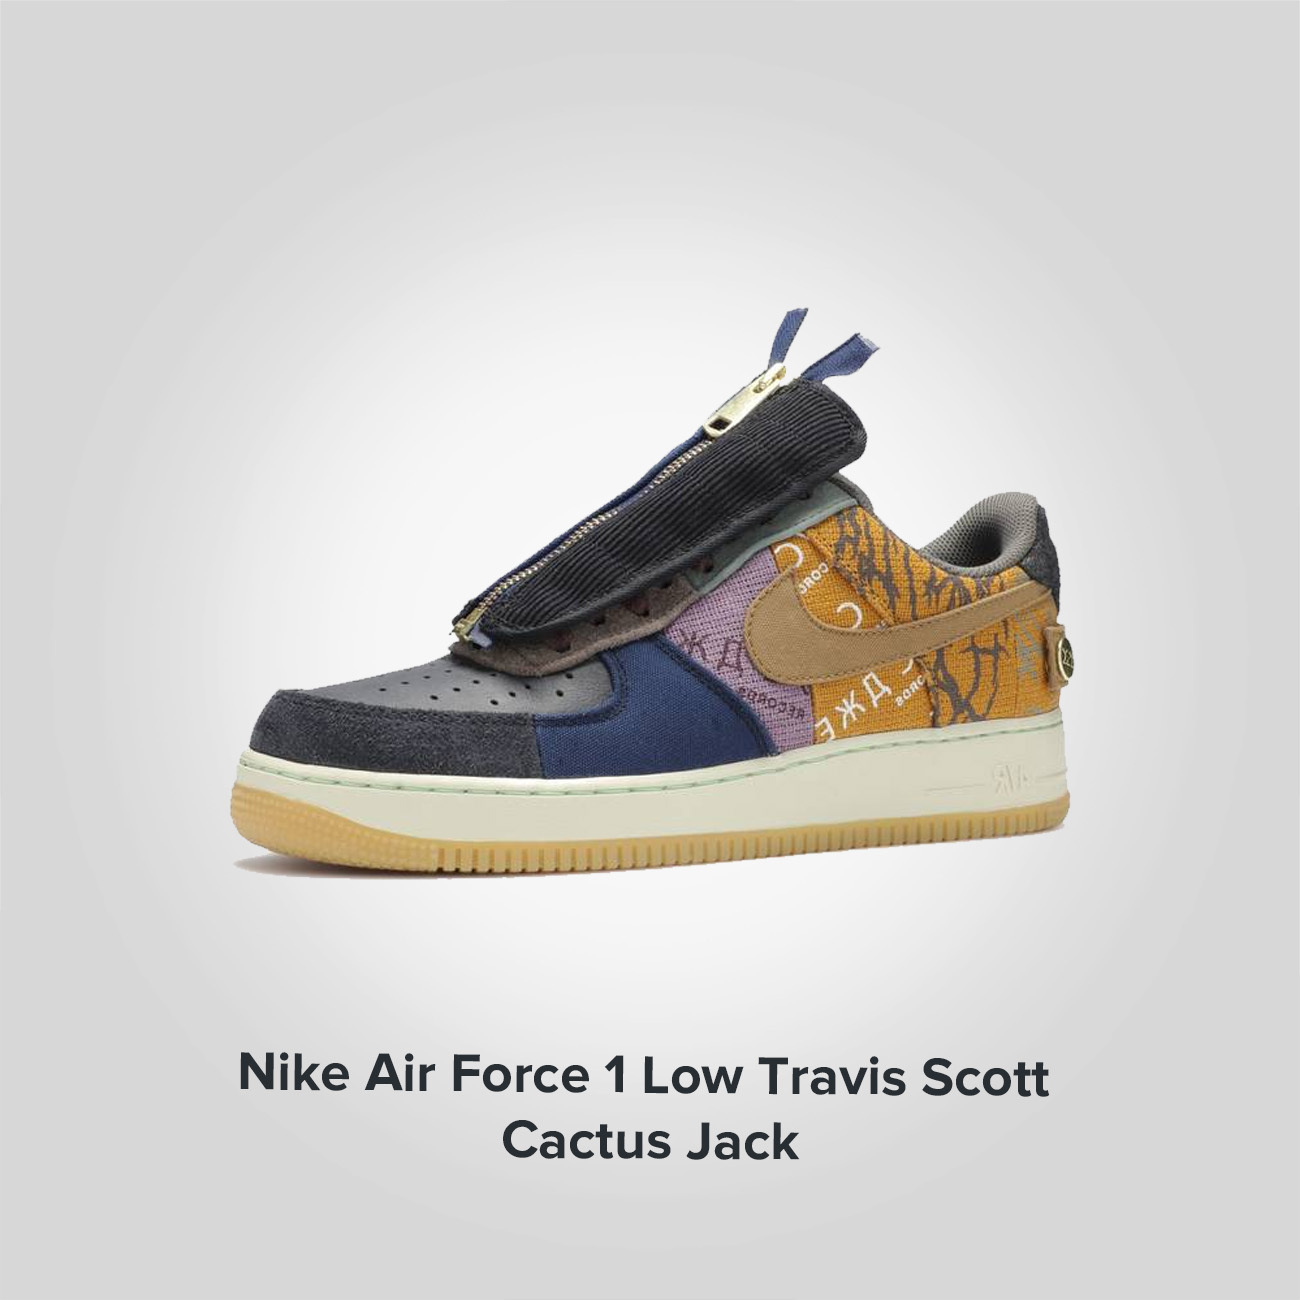 Nike Air Force 1 Low Travis Scott Cactus Jack